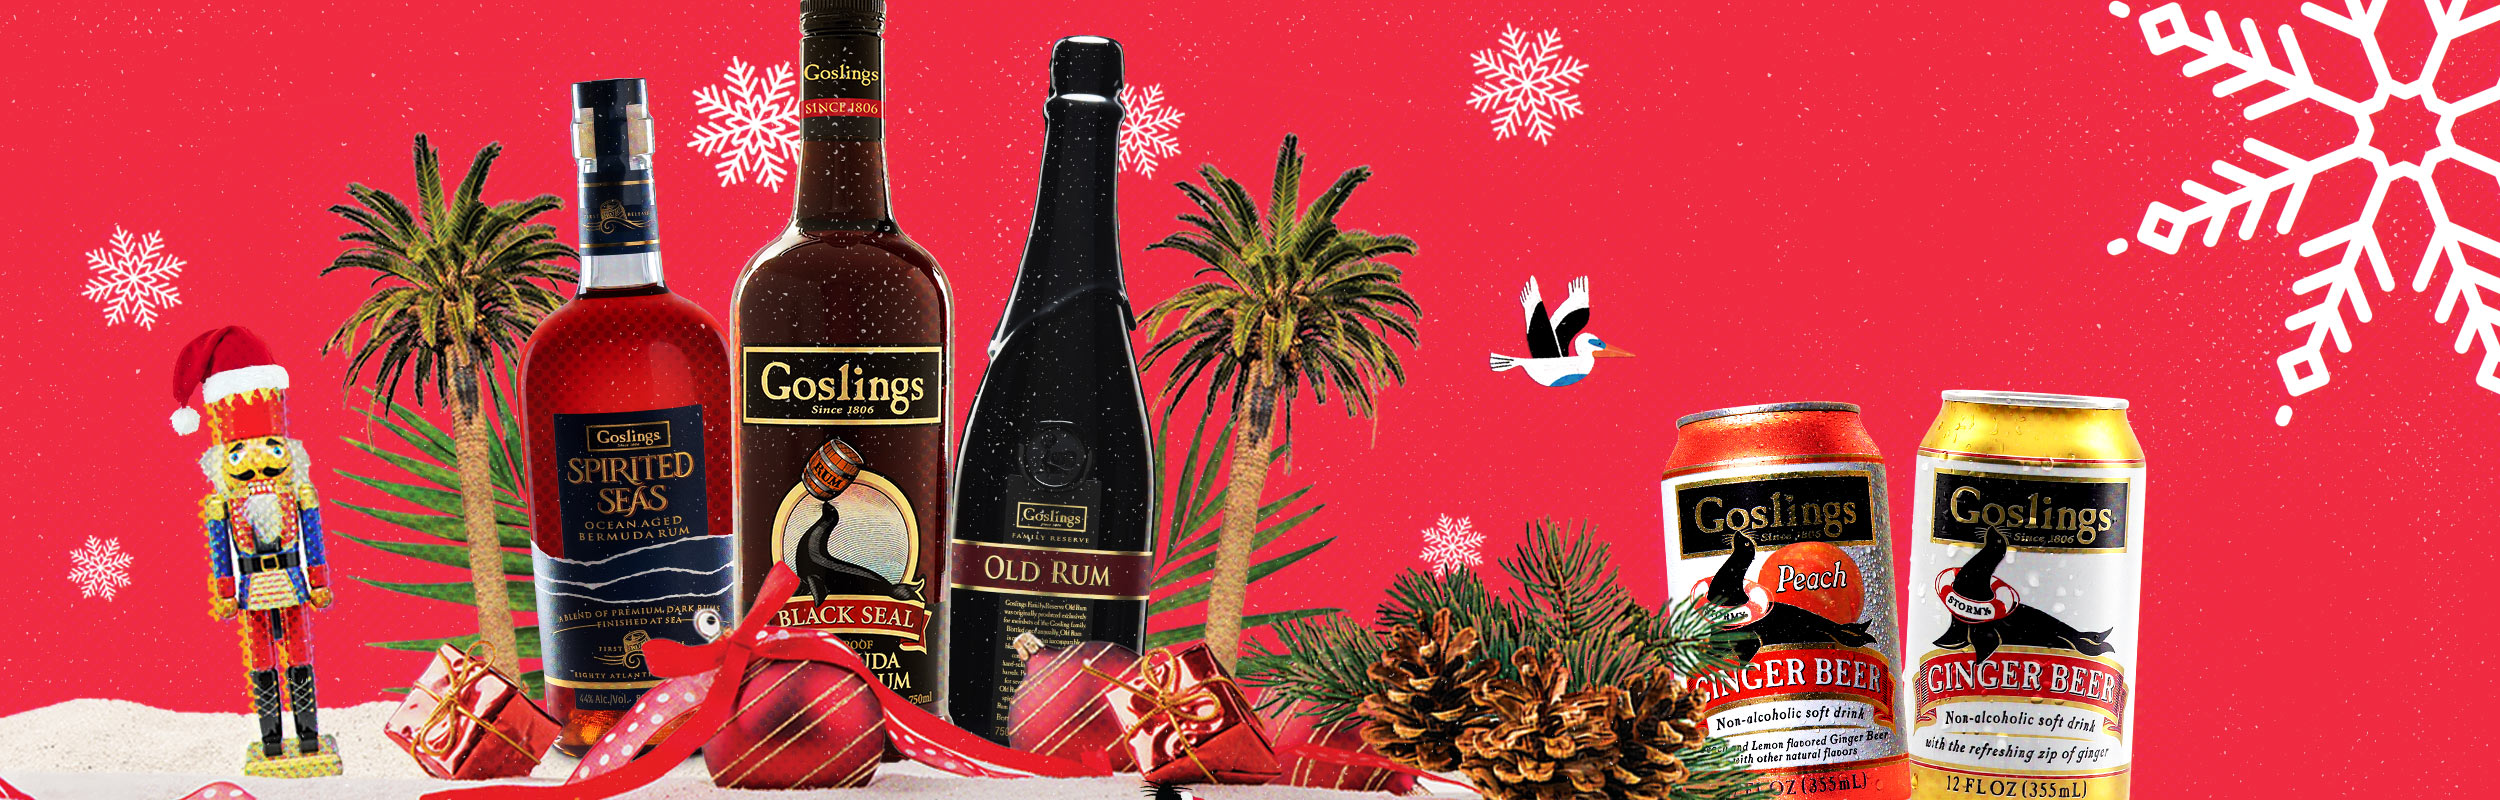 Goslings Rum Holiday 2023 product portfolio